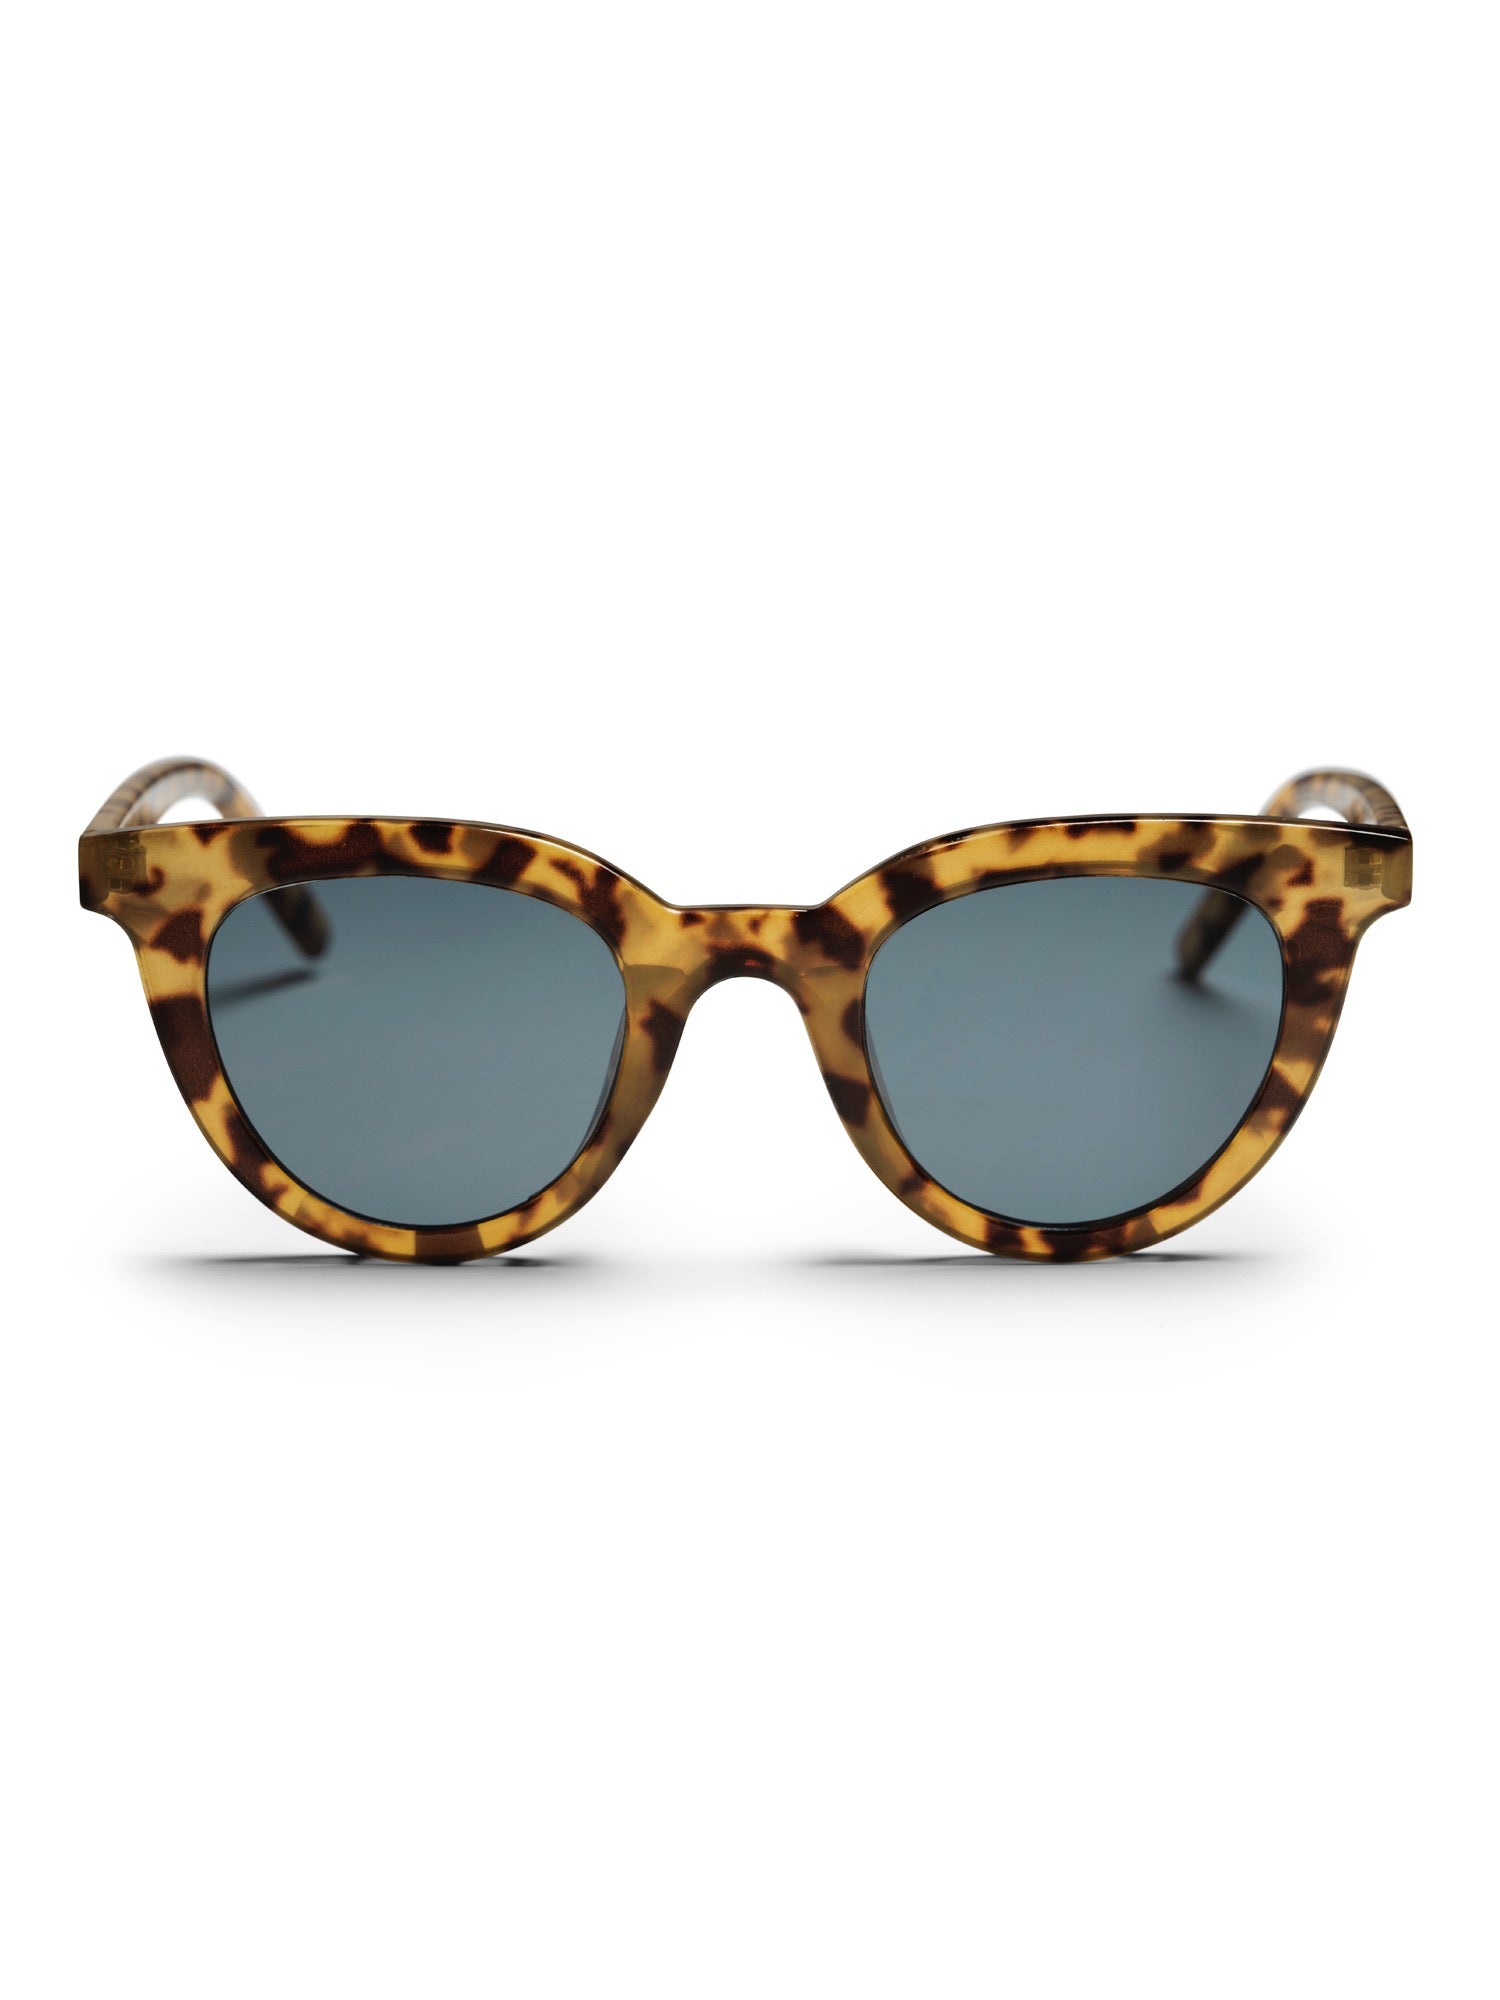 CHPO Långholmen Sunglasses - Recycled Plastic Leopard Black Sunglasses